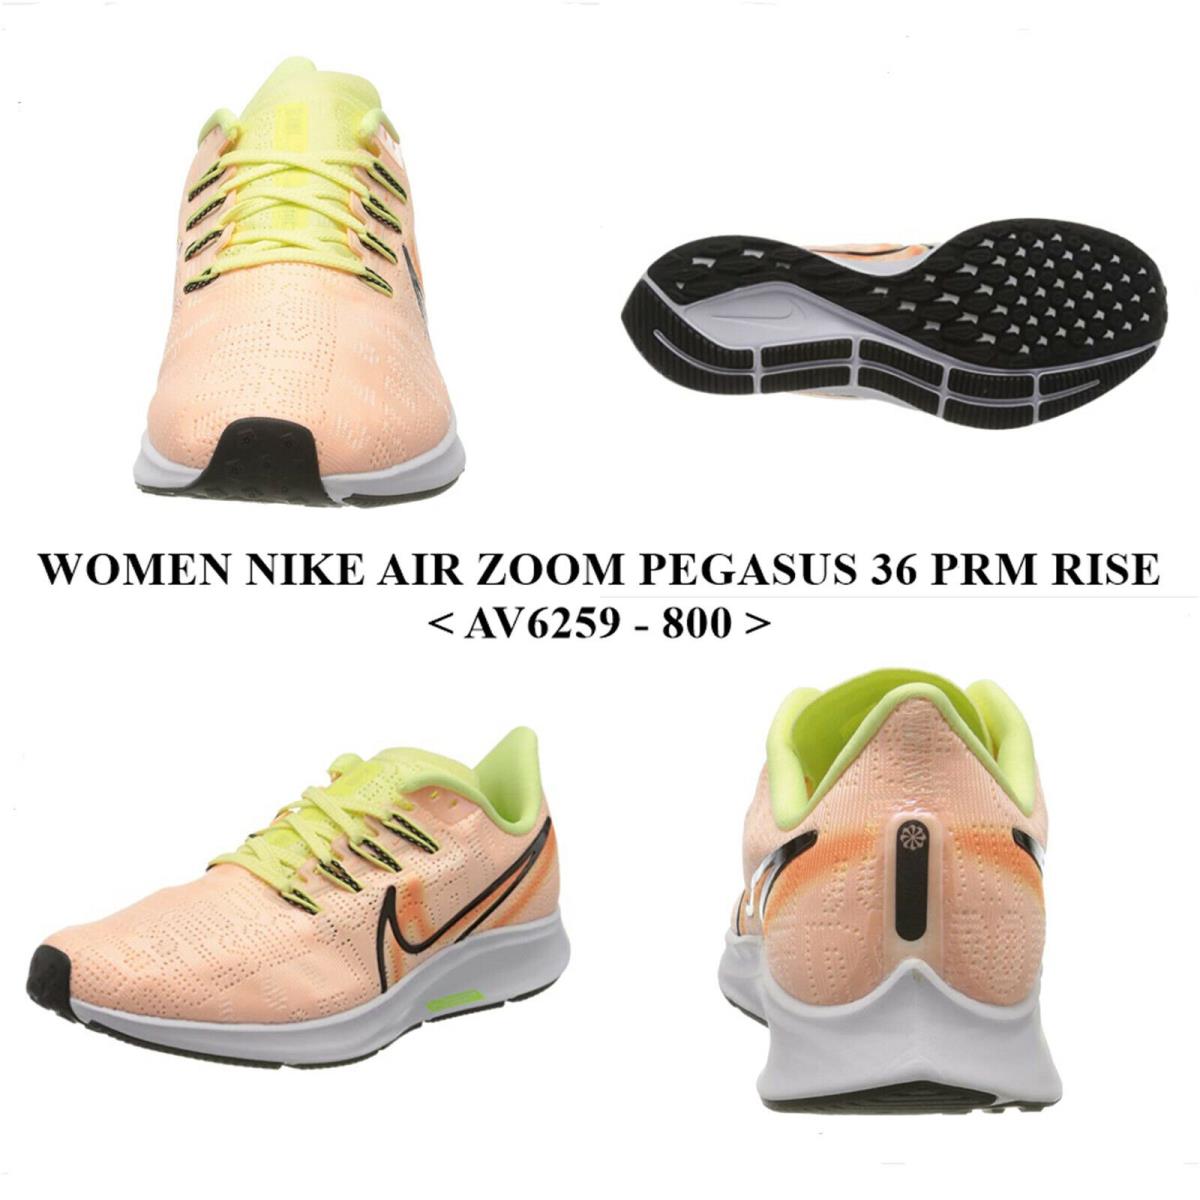 Women`s Nike Air Zoom Pegasus 36 Prm Rise AV6259 - 800 Running/casual Shoe`s - CRIMSON TINT/BLACK